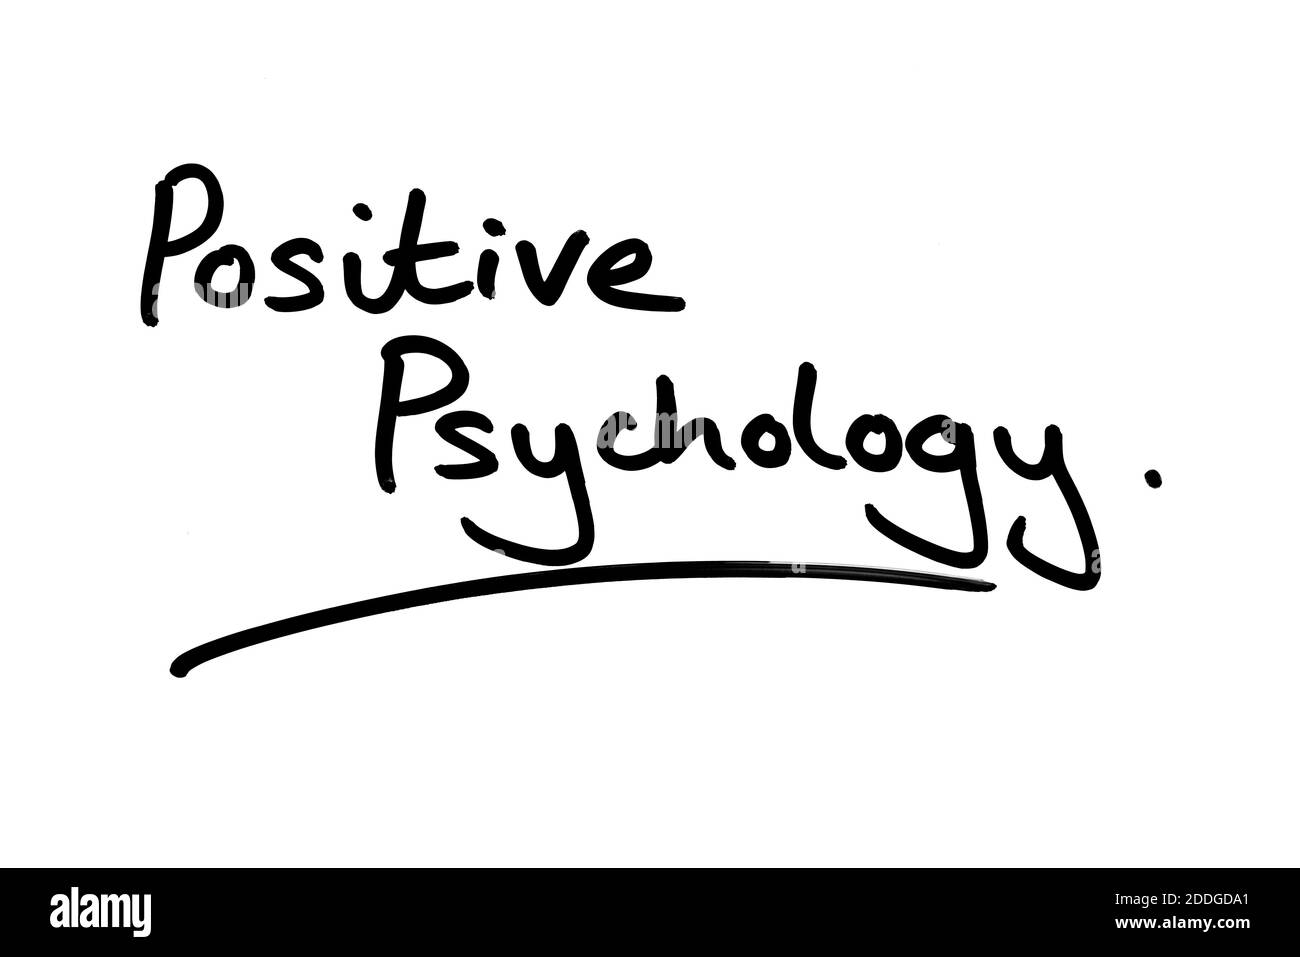 Positive Psychology handwritten on a white background. Stock Photo